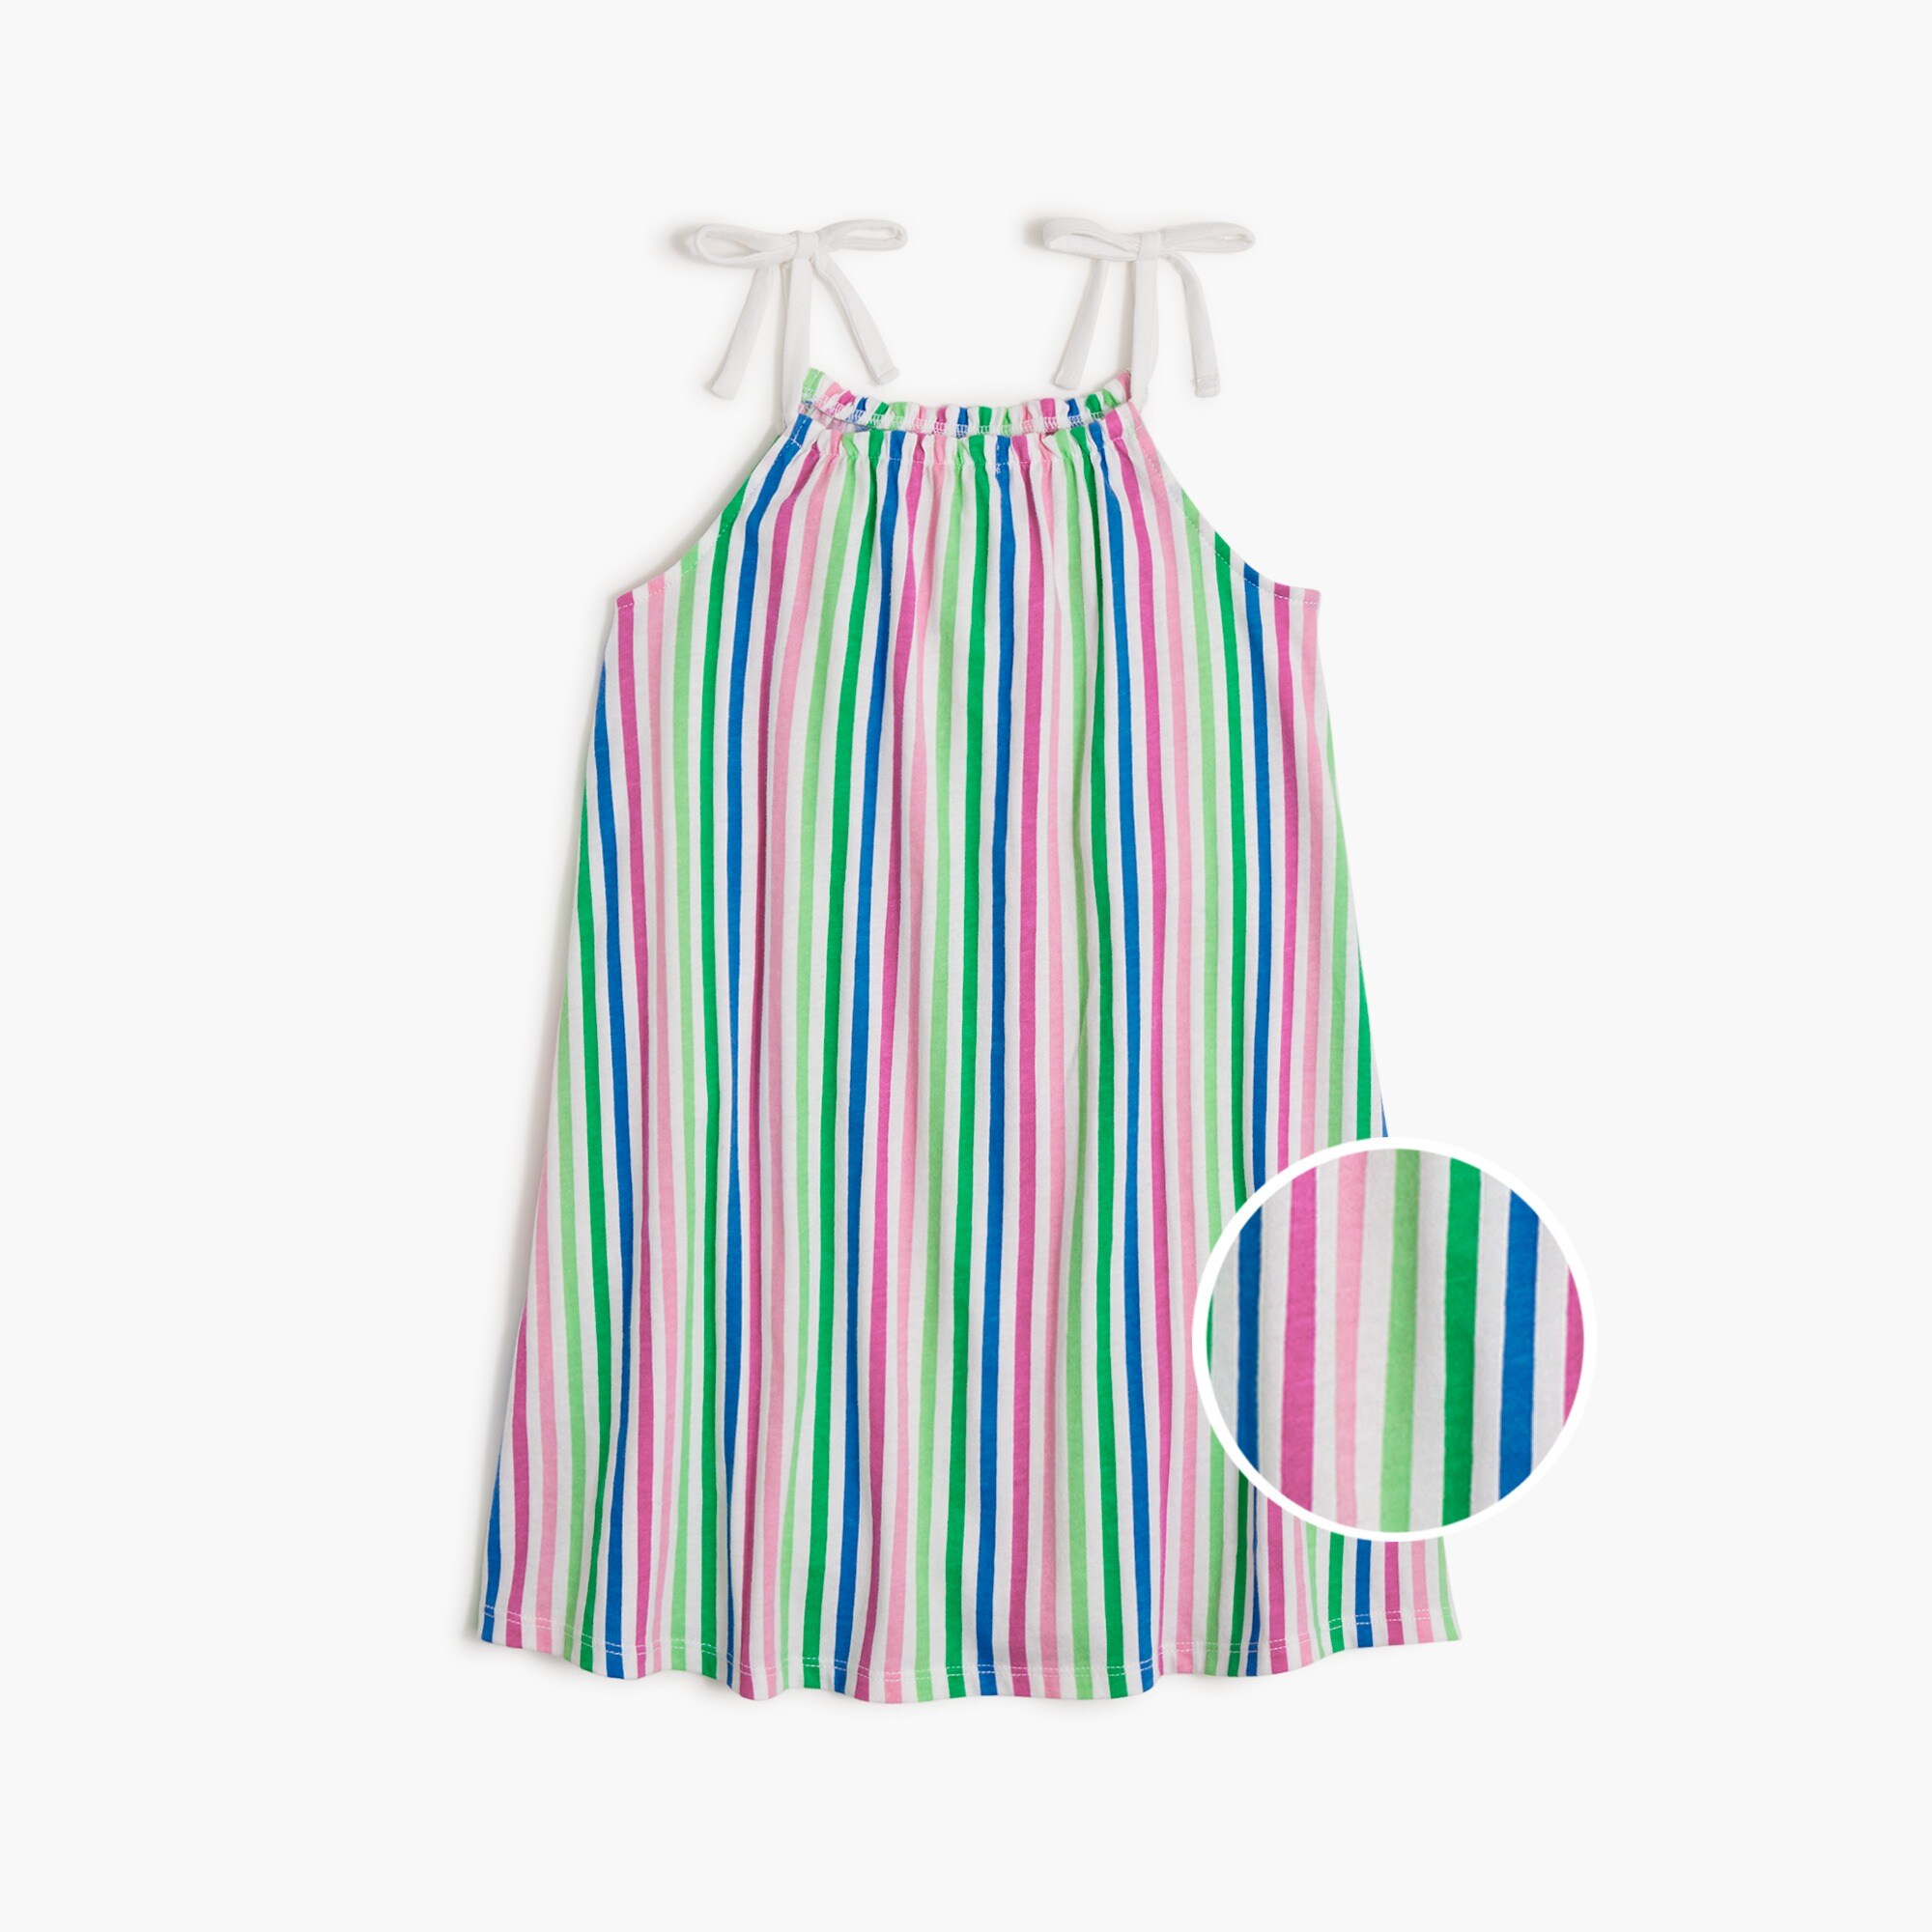  Girls' tie-shoulder striped dress